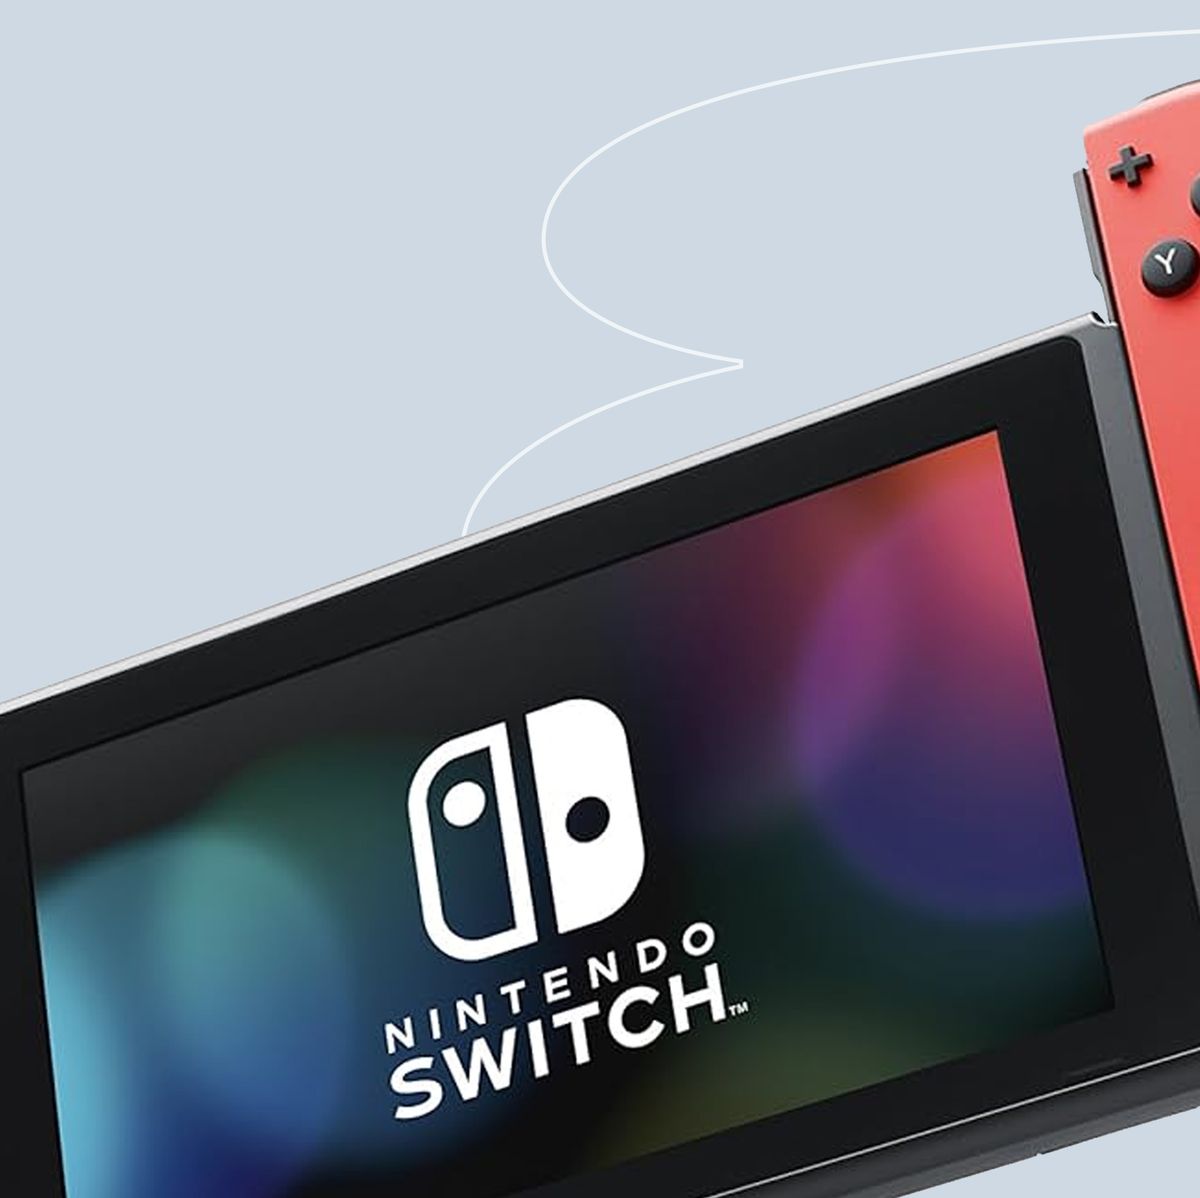 Nintendo Switch sale: Save 16% today